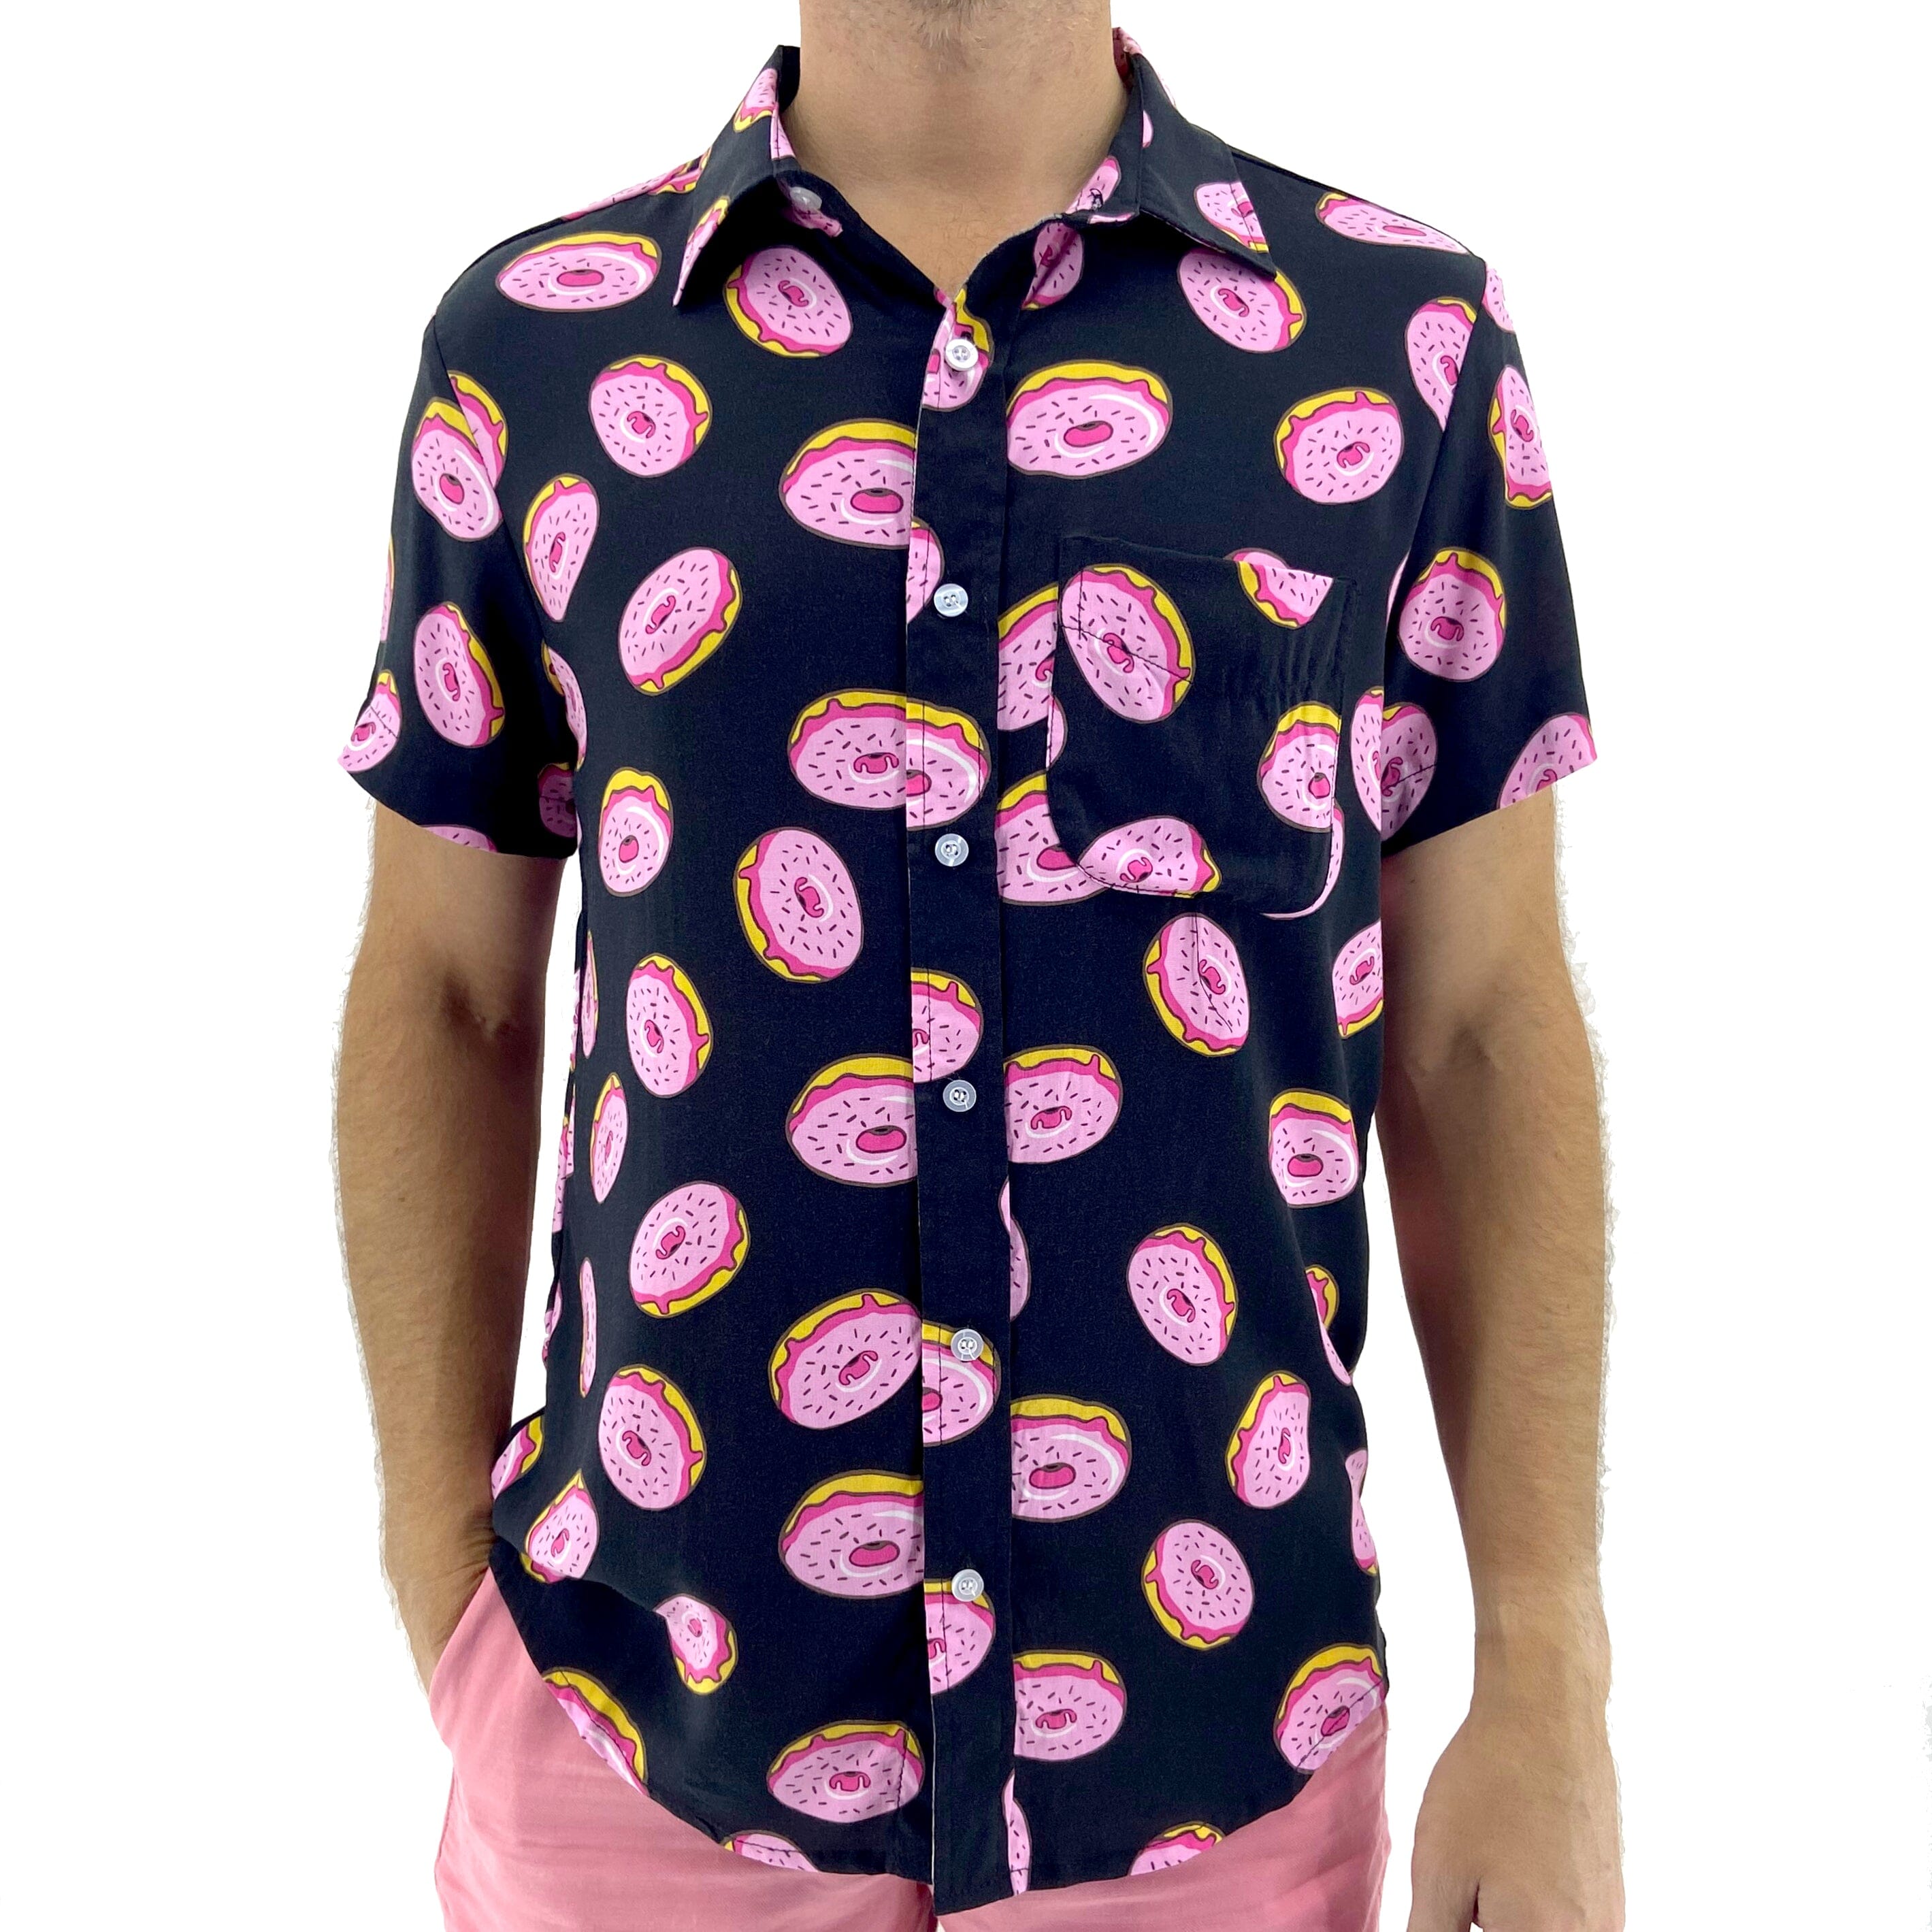 Trendy All-Over-Print Men's Shirts. Fun Colorful Hawaiian Aloha Shirts